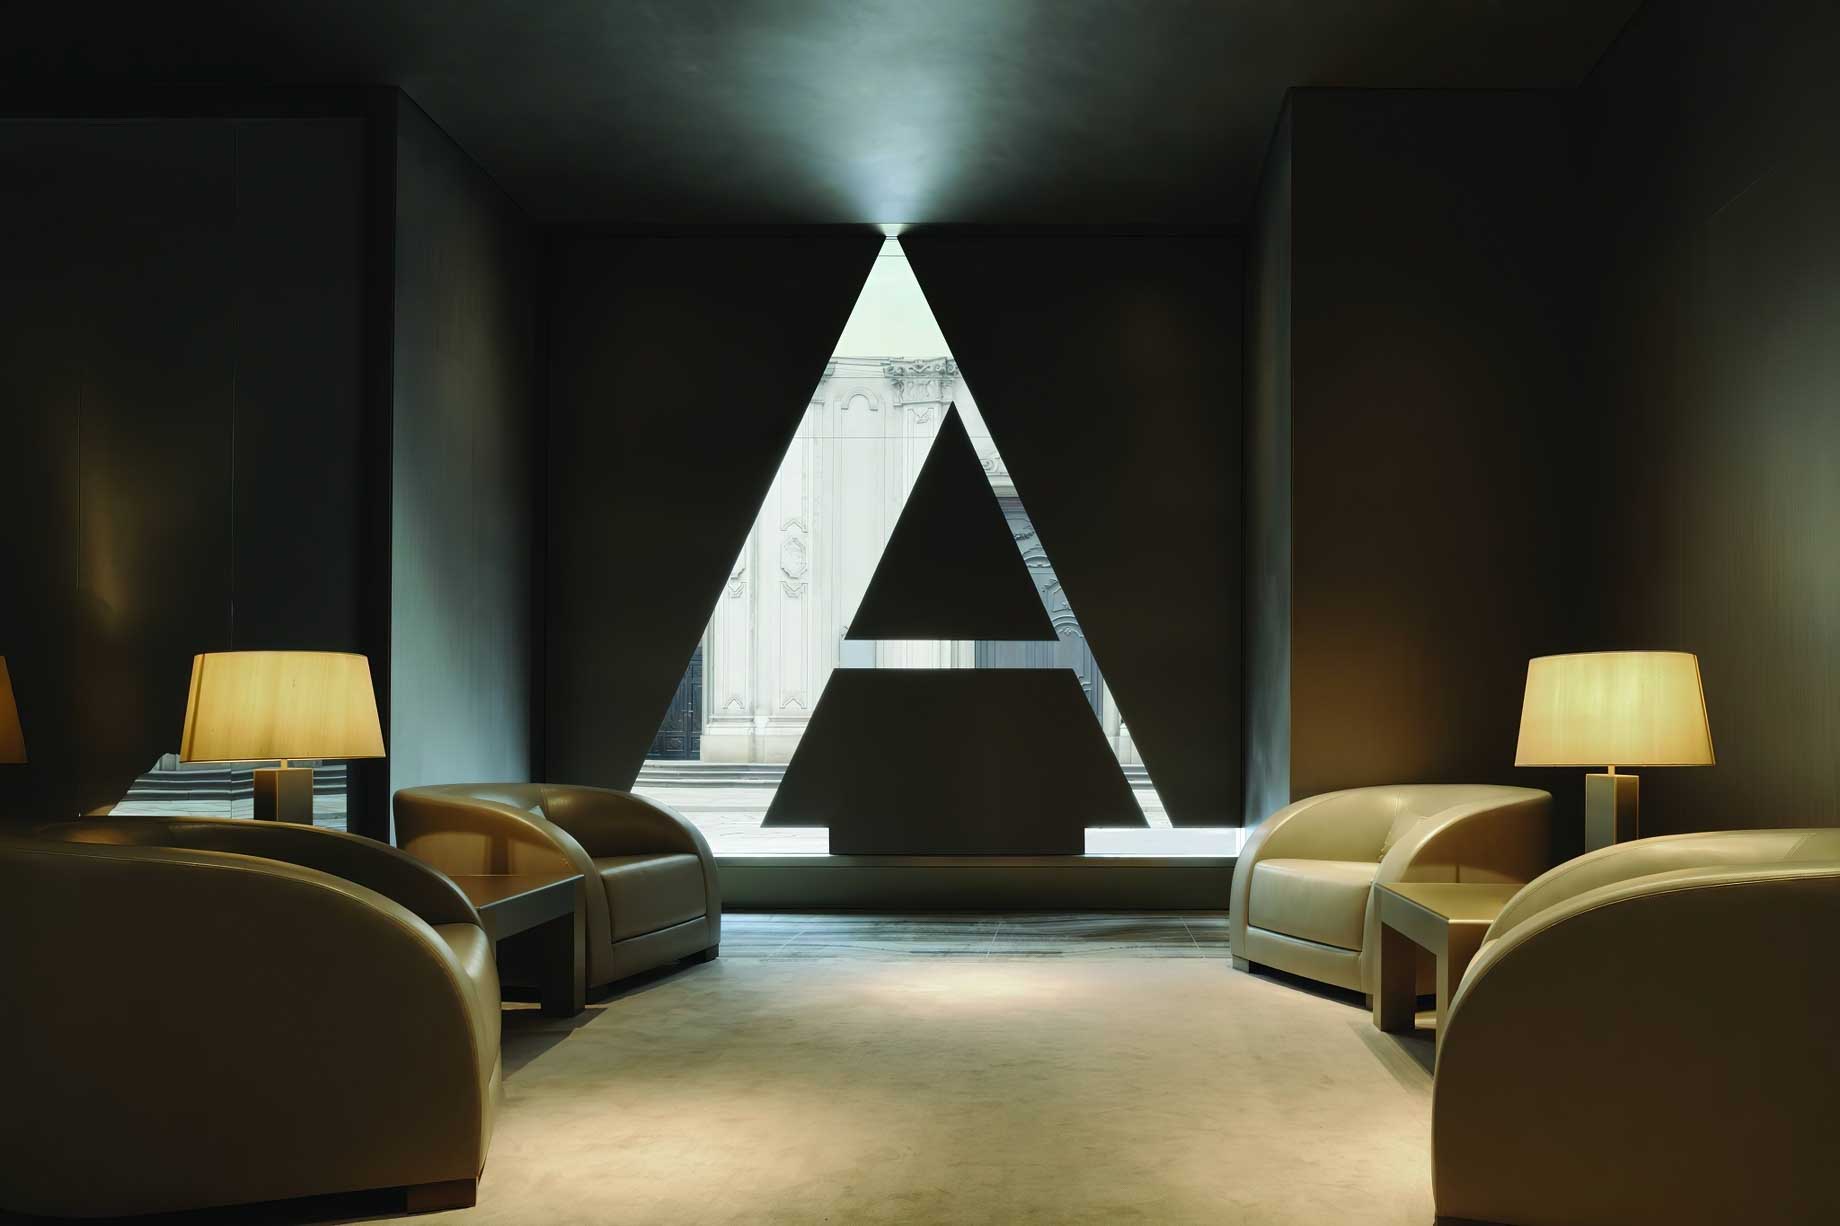 Armani Hotel Milano – Milan, Italy – Lounge Chairs